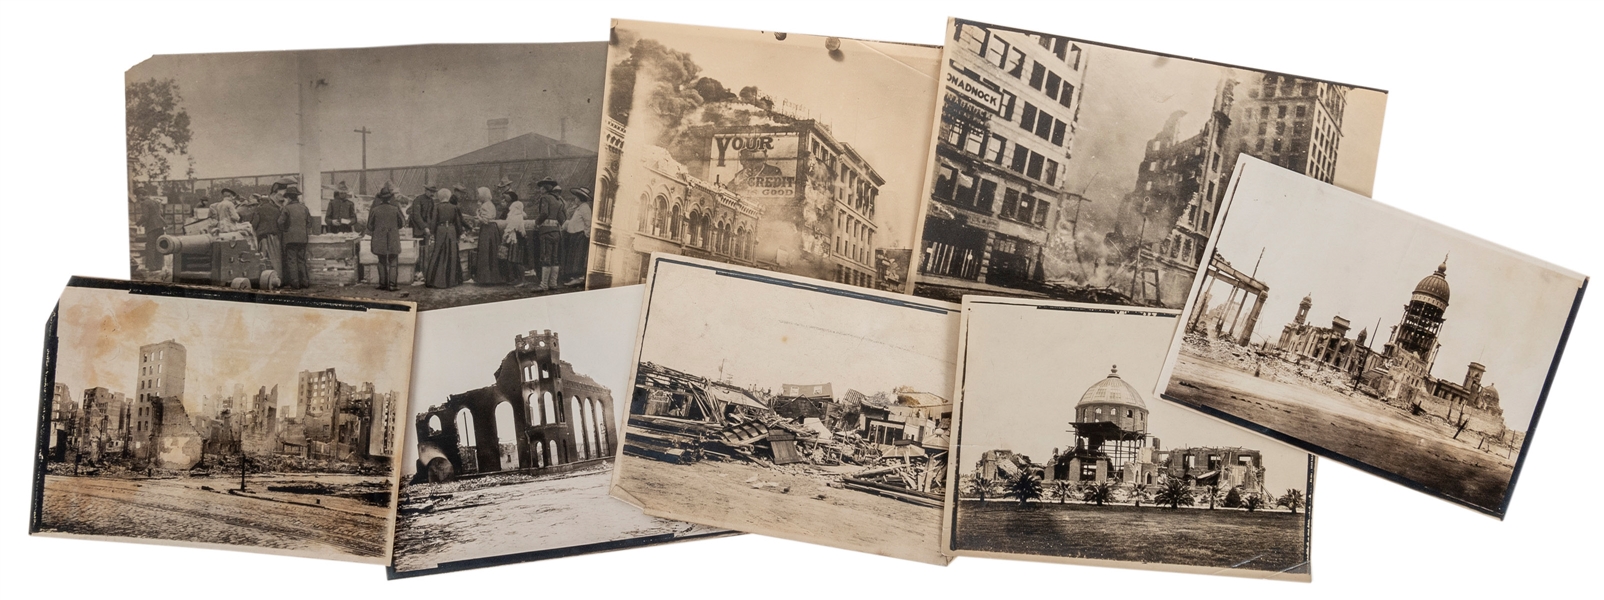  [SAN FRANCISCO EARTHQUAKE]. A group of photographs depictin...